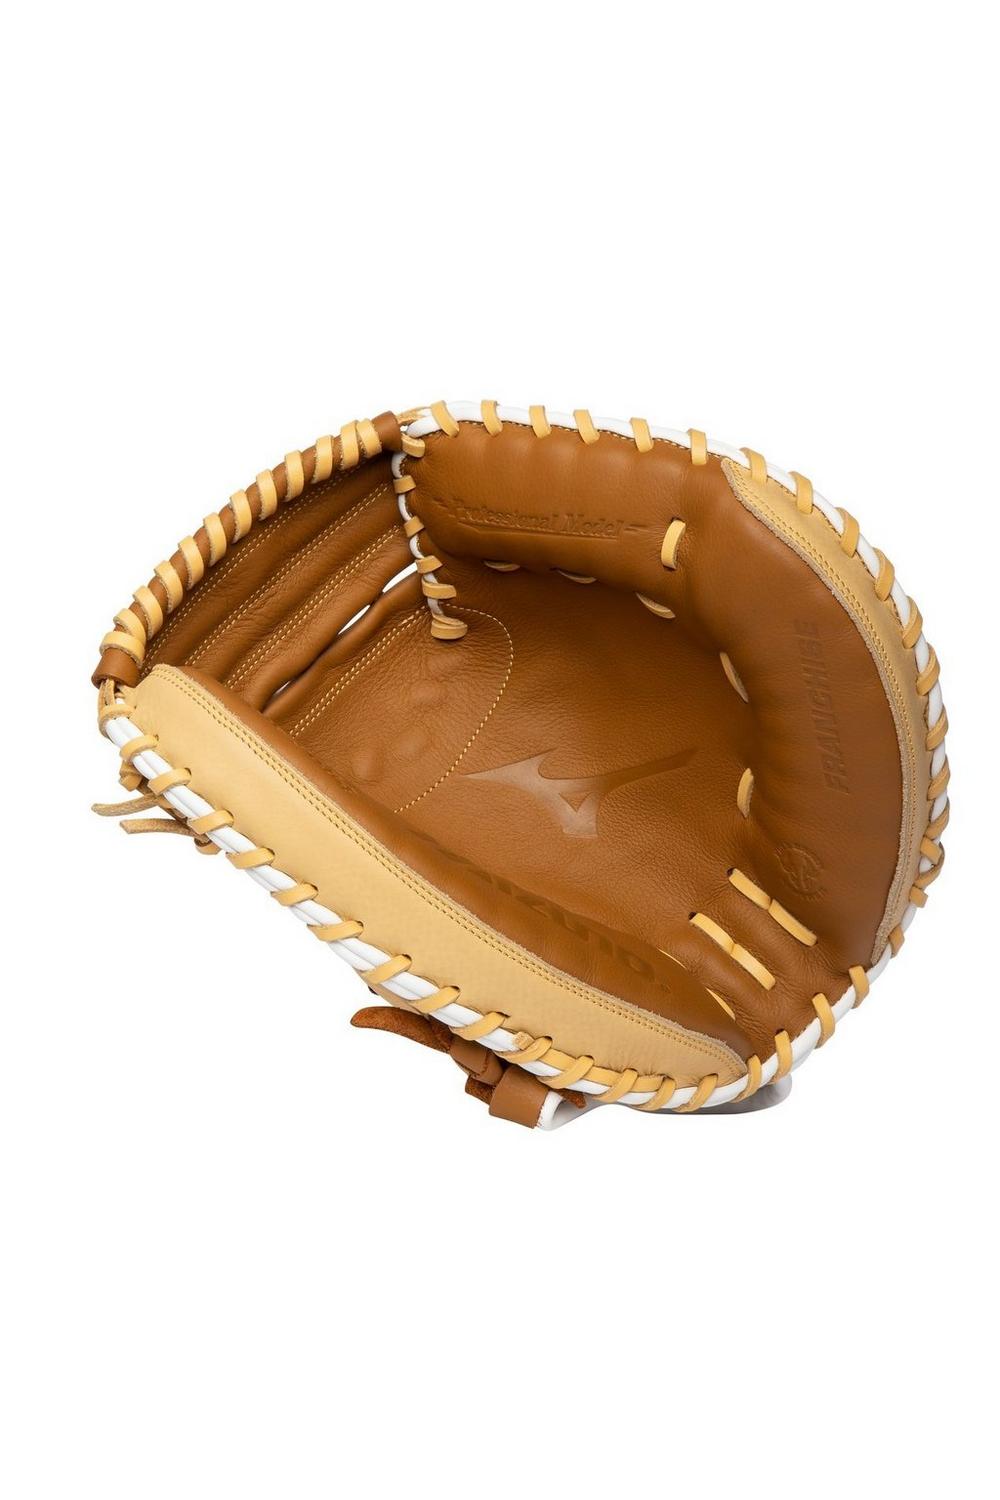 Mizuno Franchise 33.5" - Catchers Baseball Glove